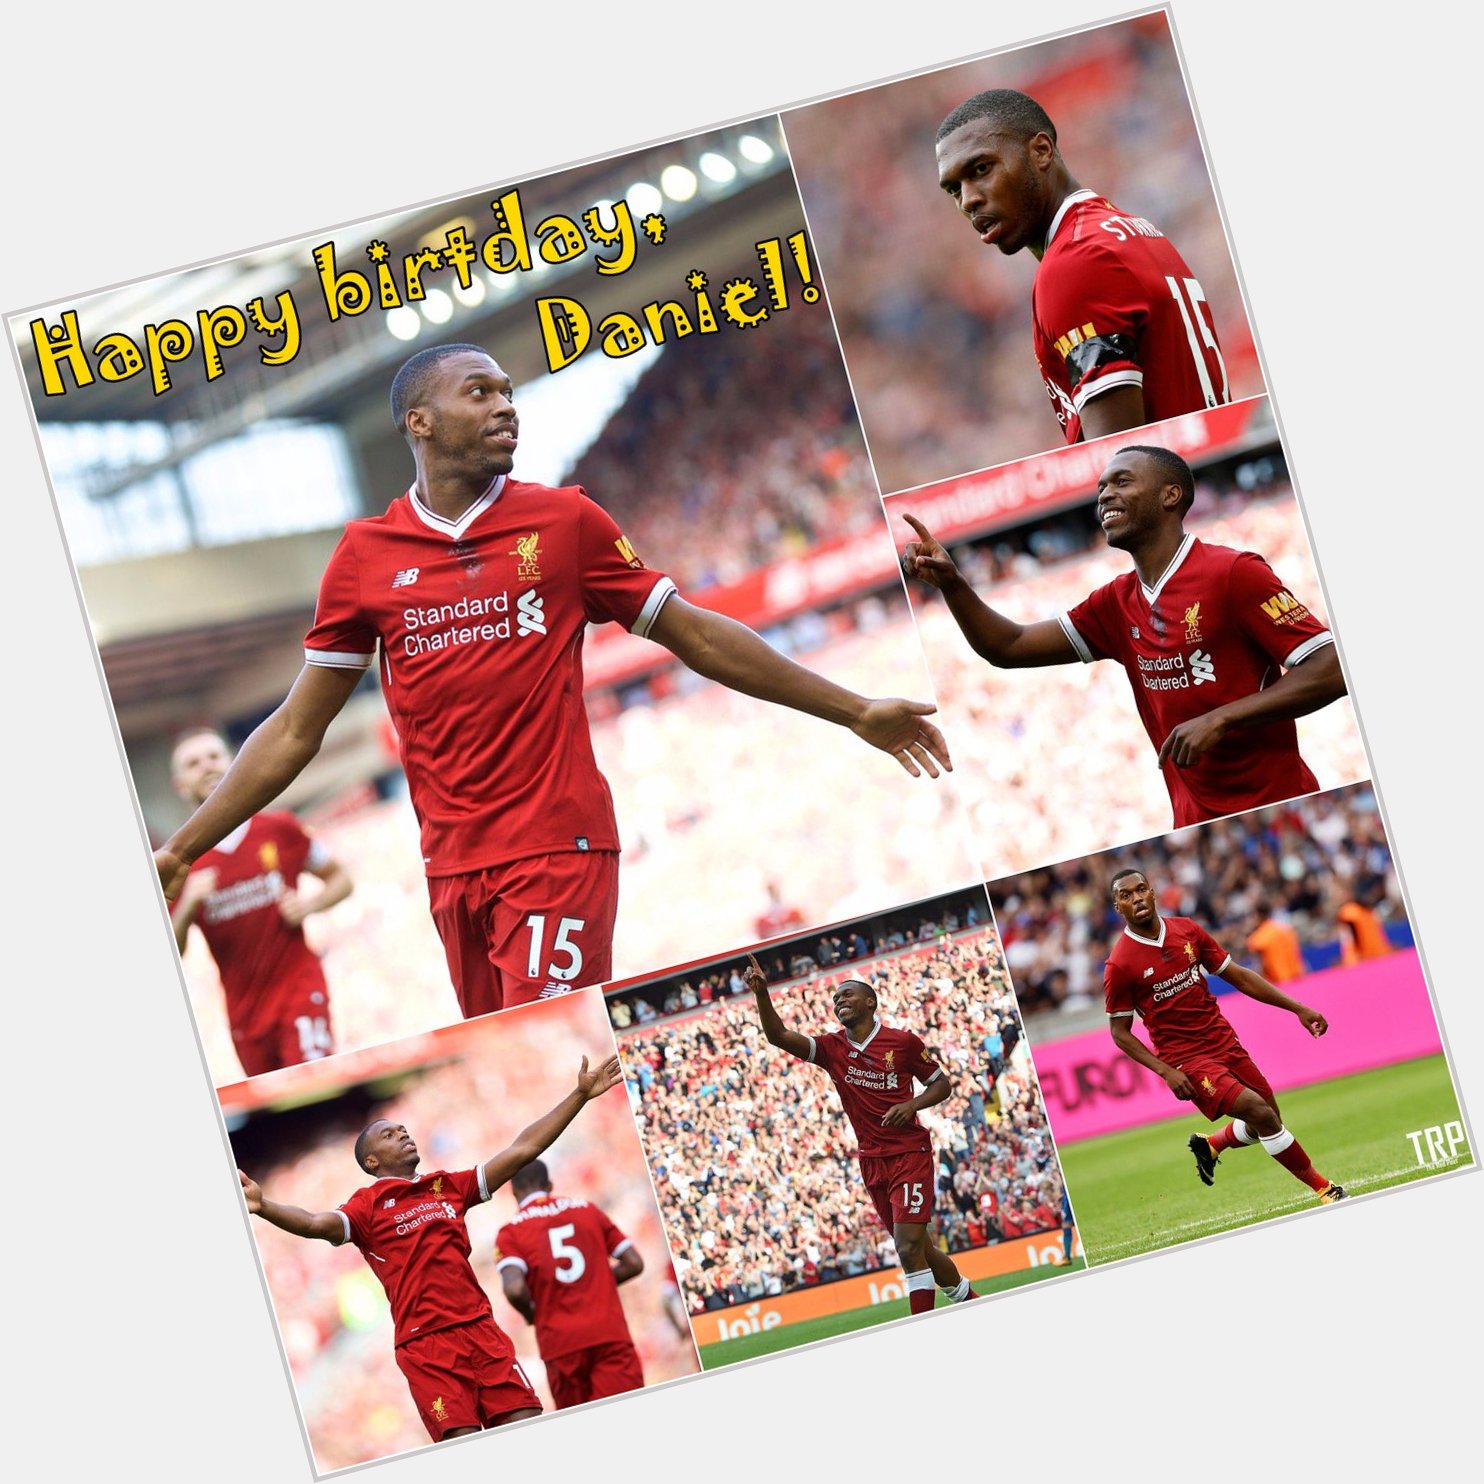 Happy birthday, Daniel Sturridge   Liverpool\s striker turns 28 today! 